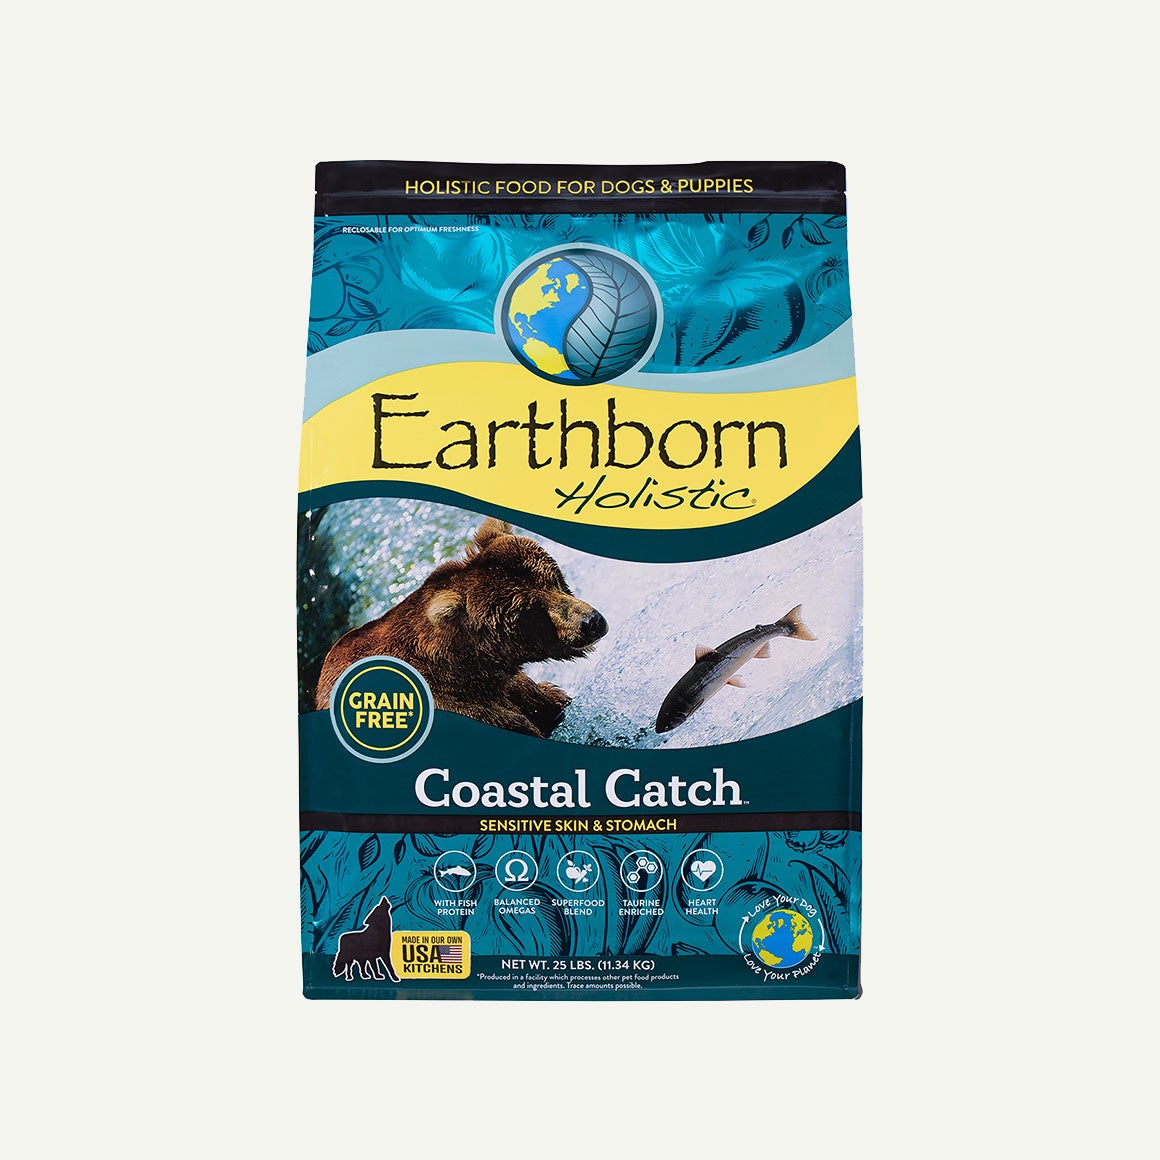 Earthborn Holistic, Earthborn Holistic Coastal Catch Grain Free Dog Food